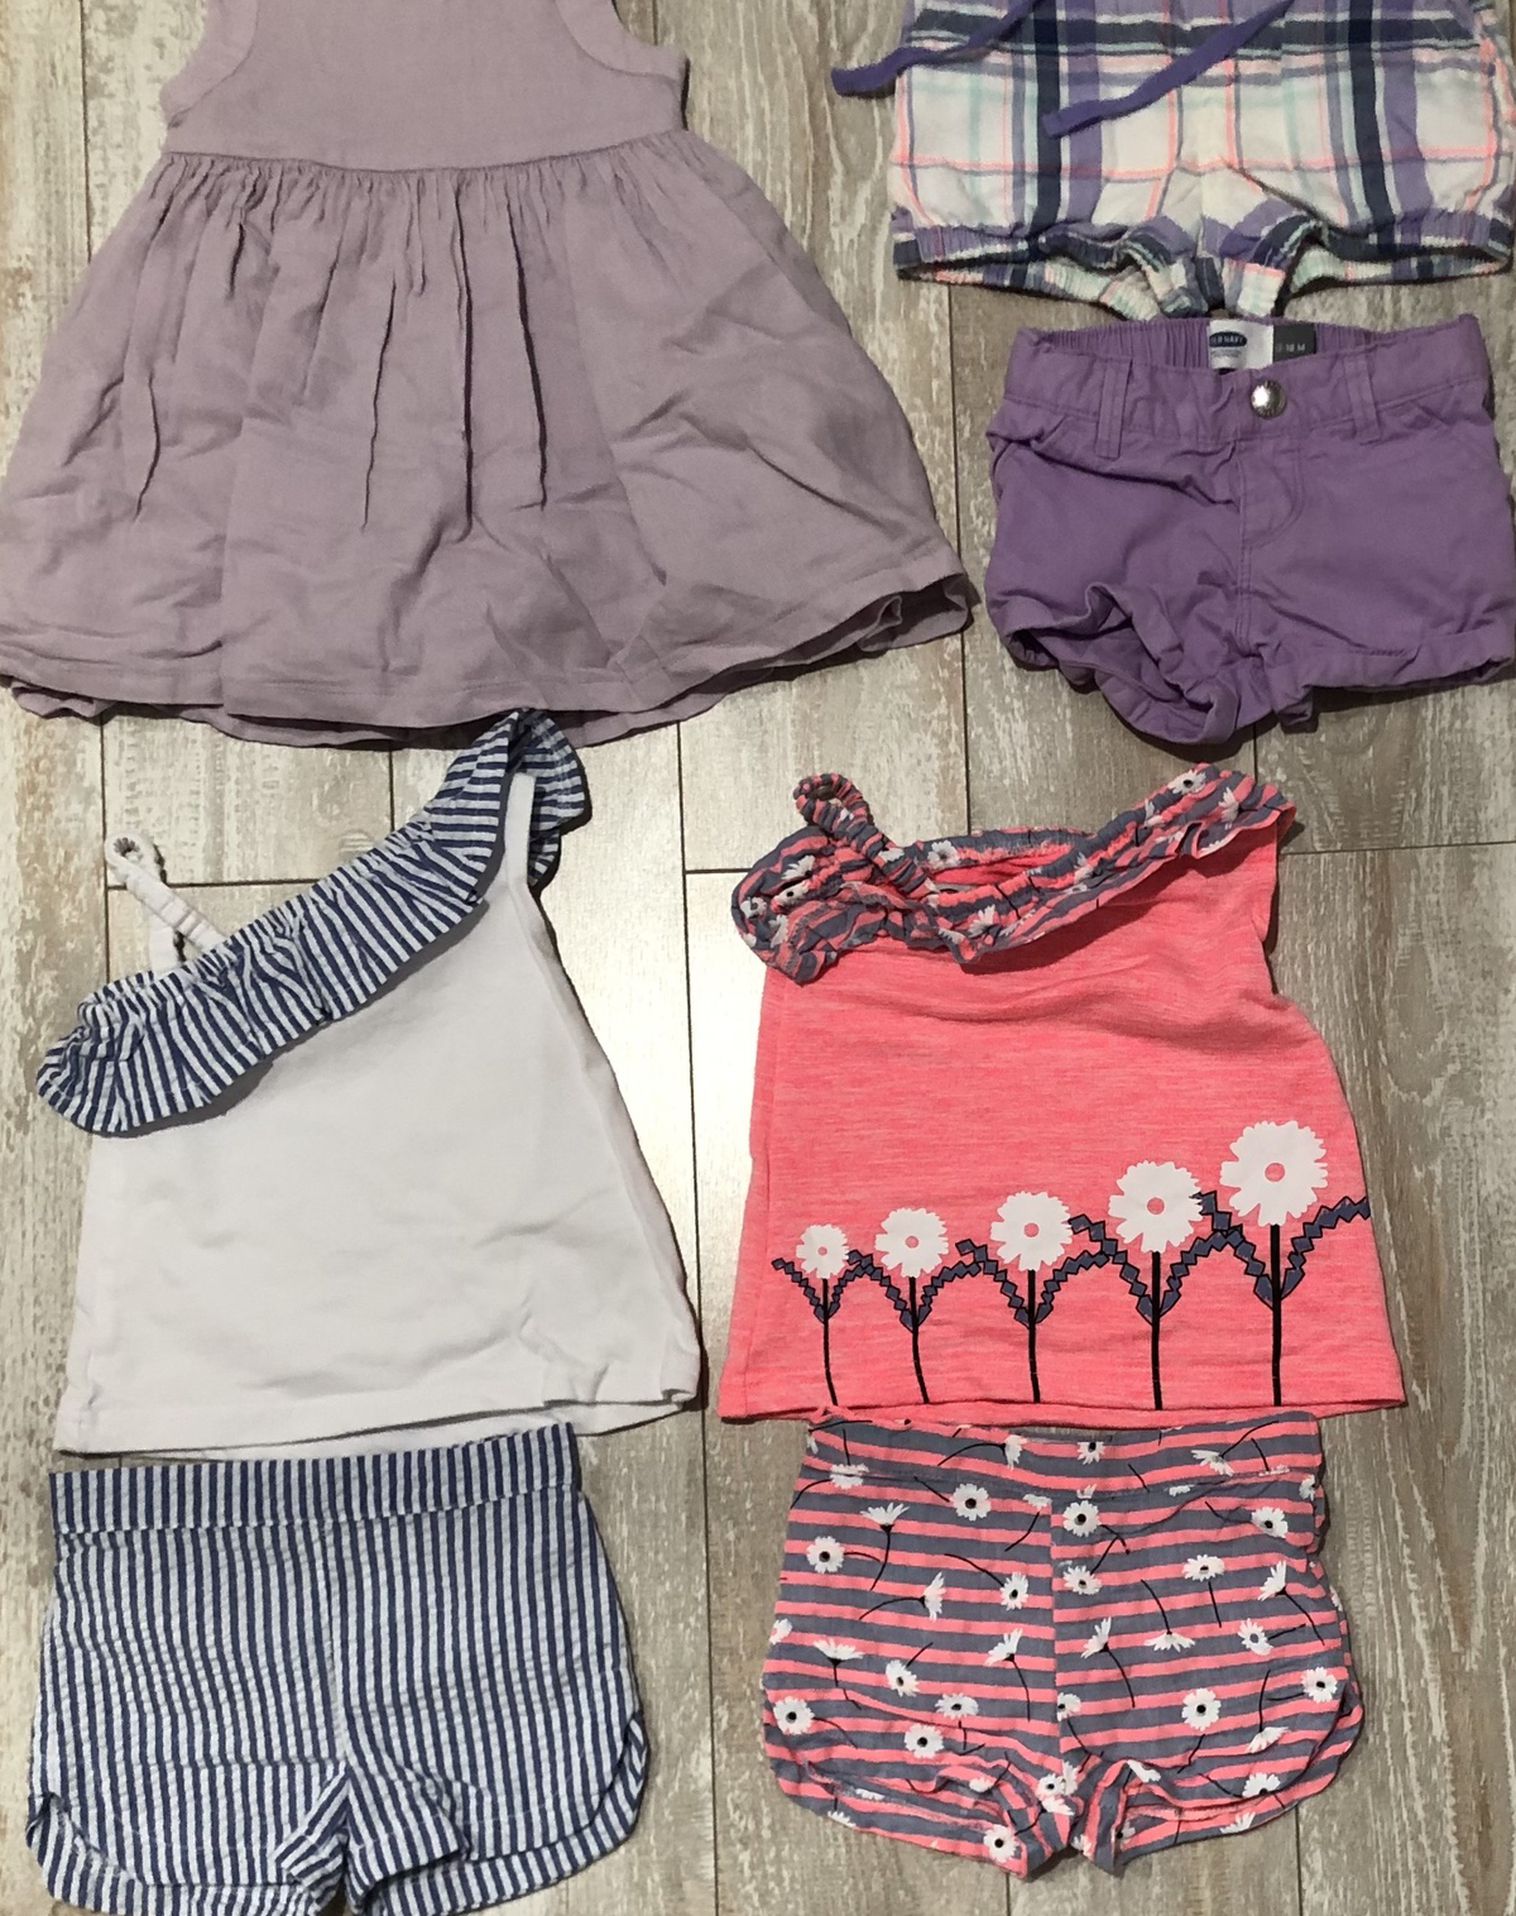 Baby girl clothes bundle